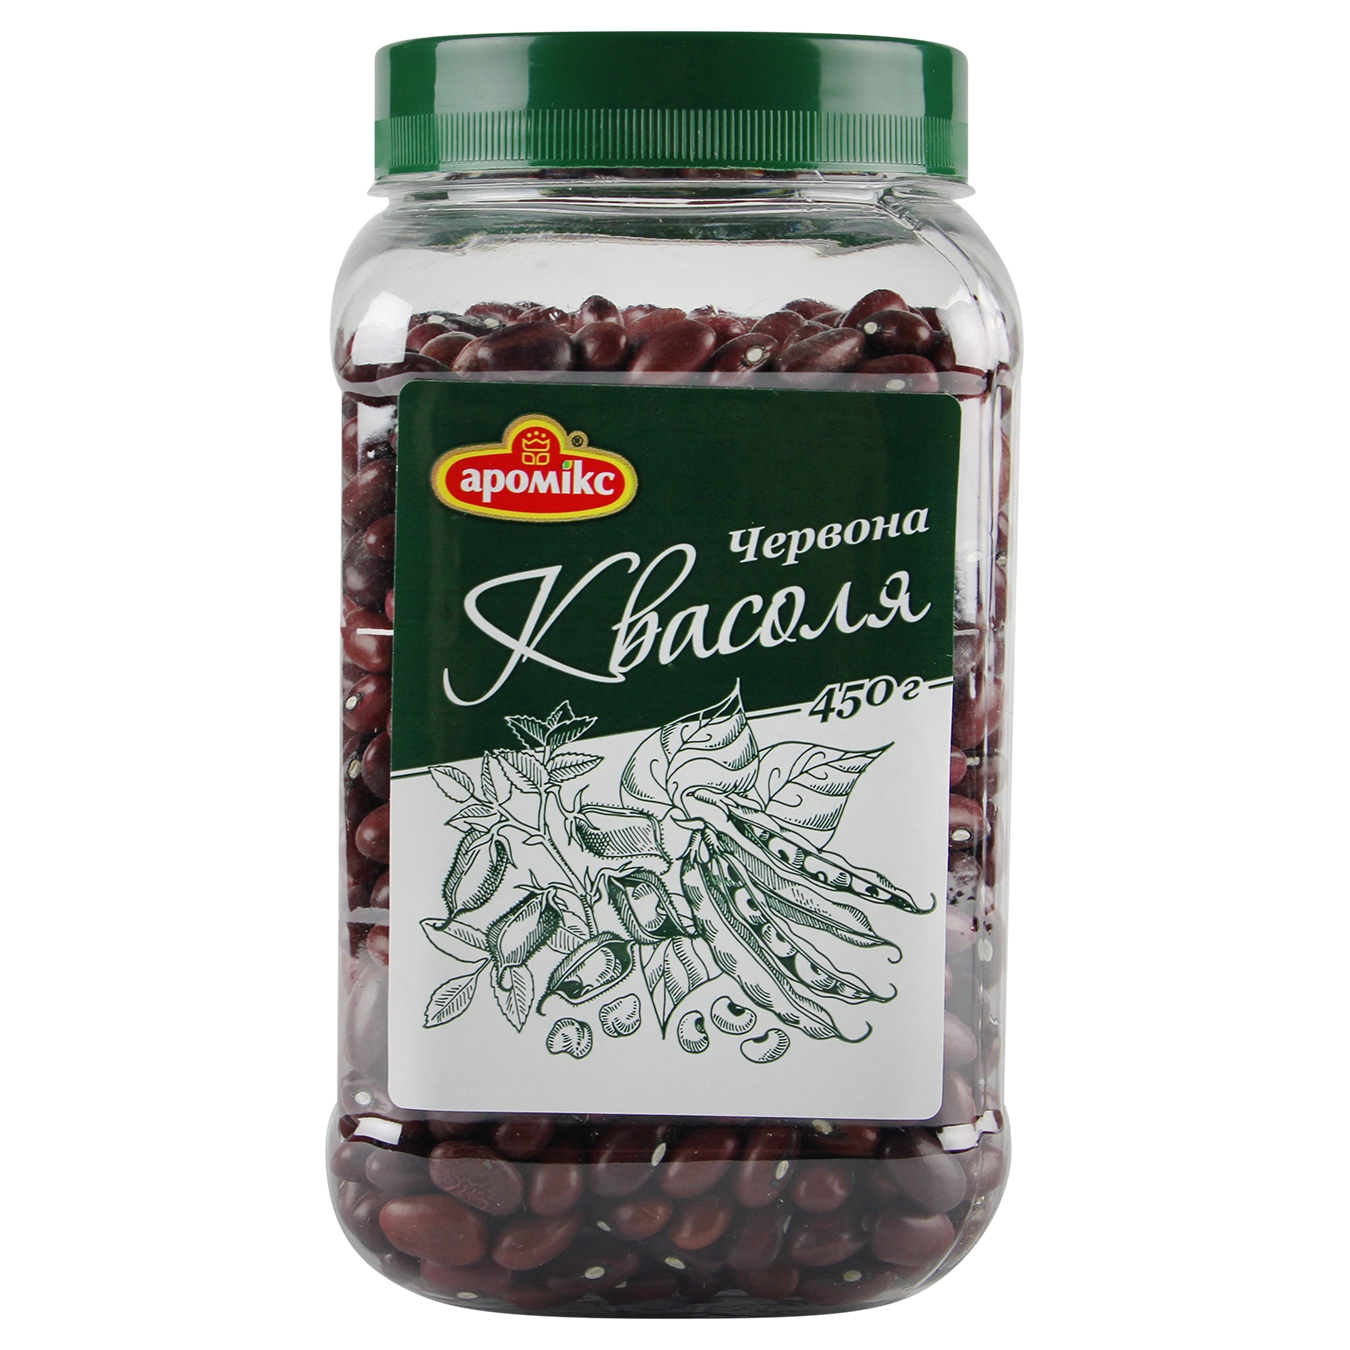 Aromix Red Beans 450g